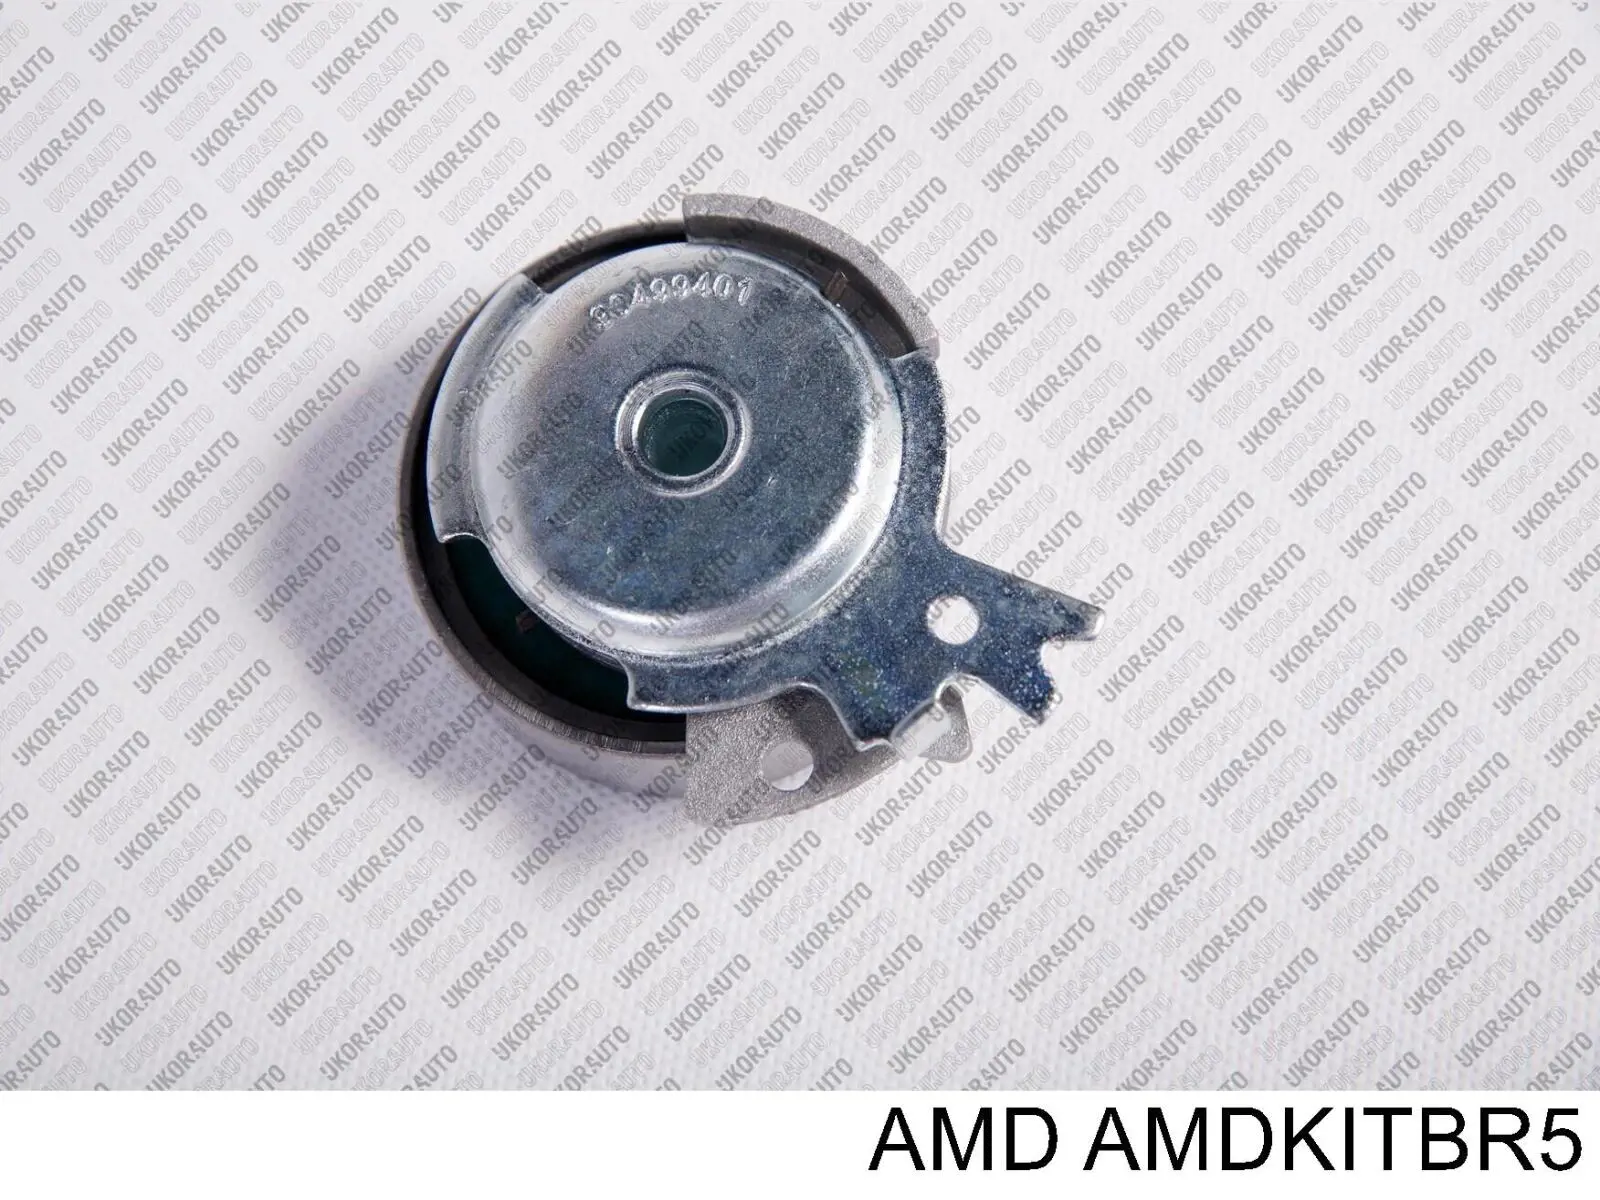 AMDKITBR5 AMD ремень грм